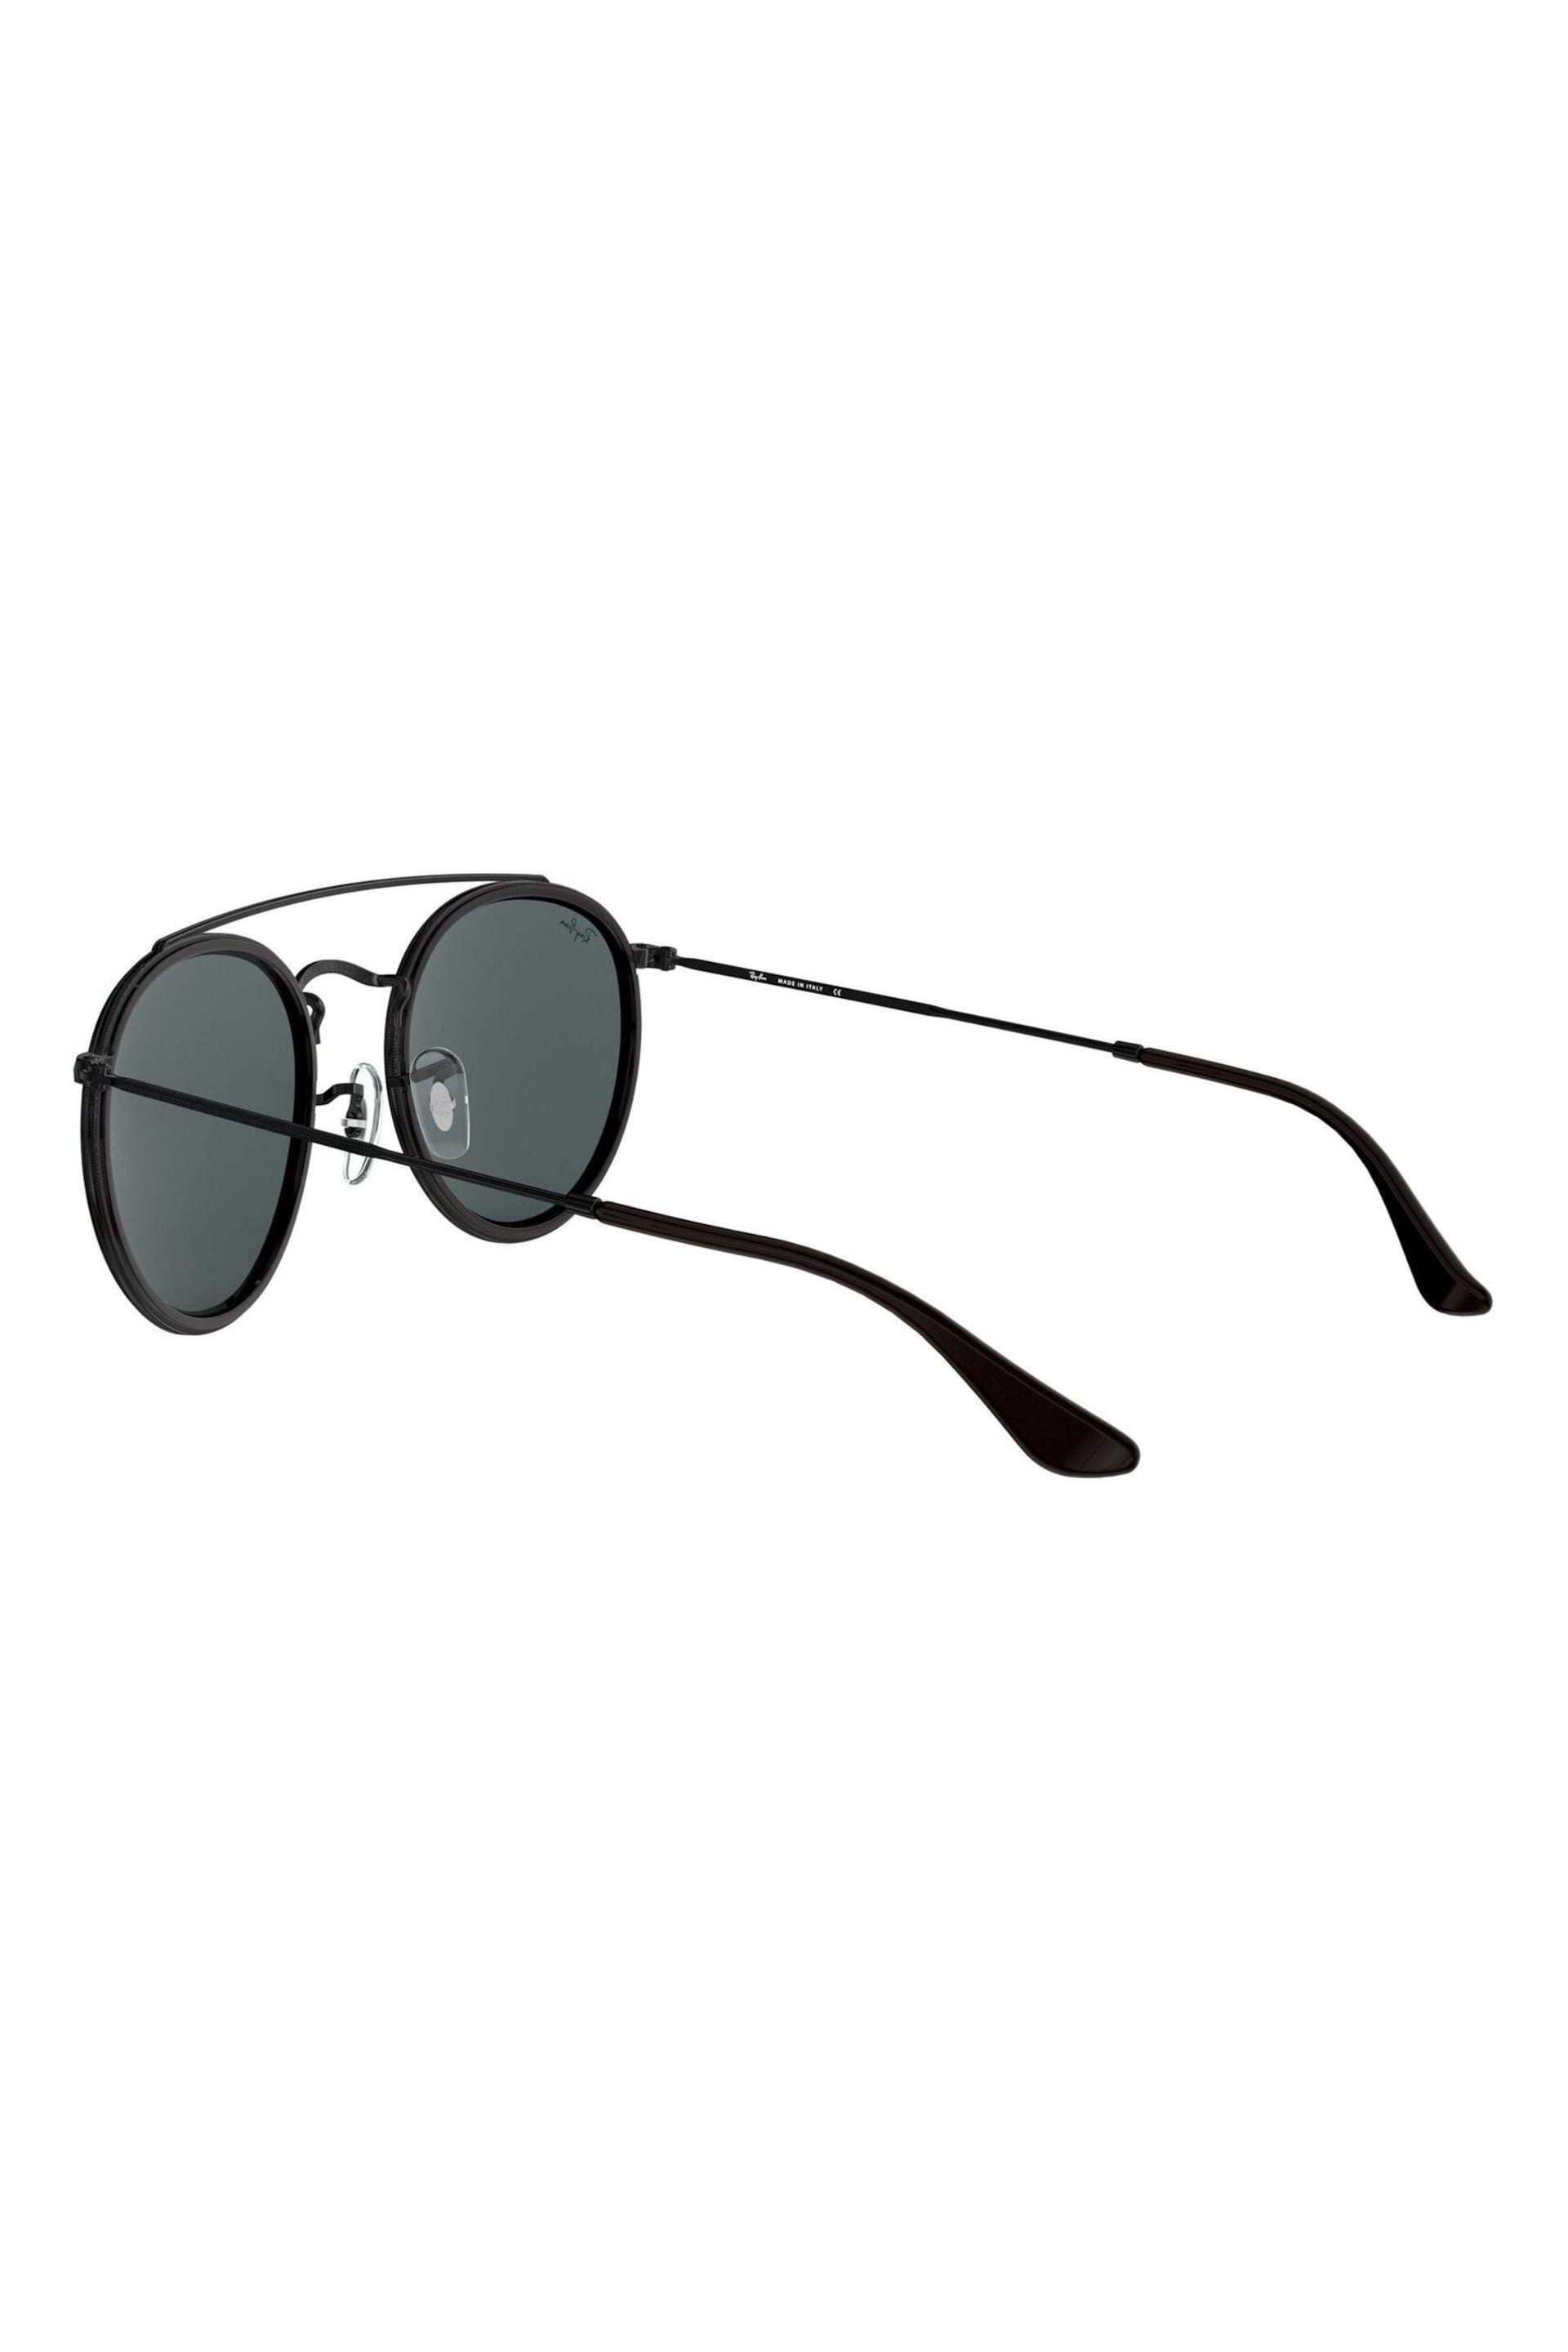 Ray-Ban Round Sunglasses - Image 8 of 14